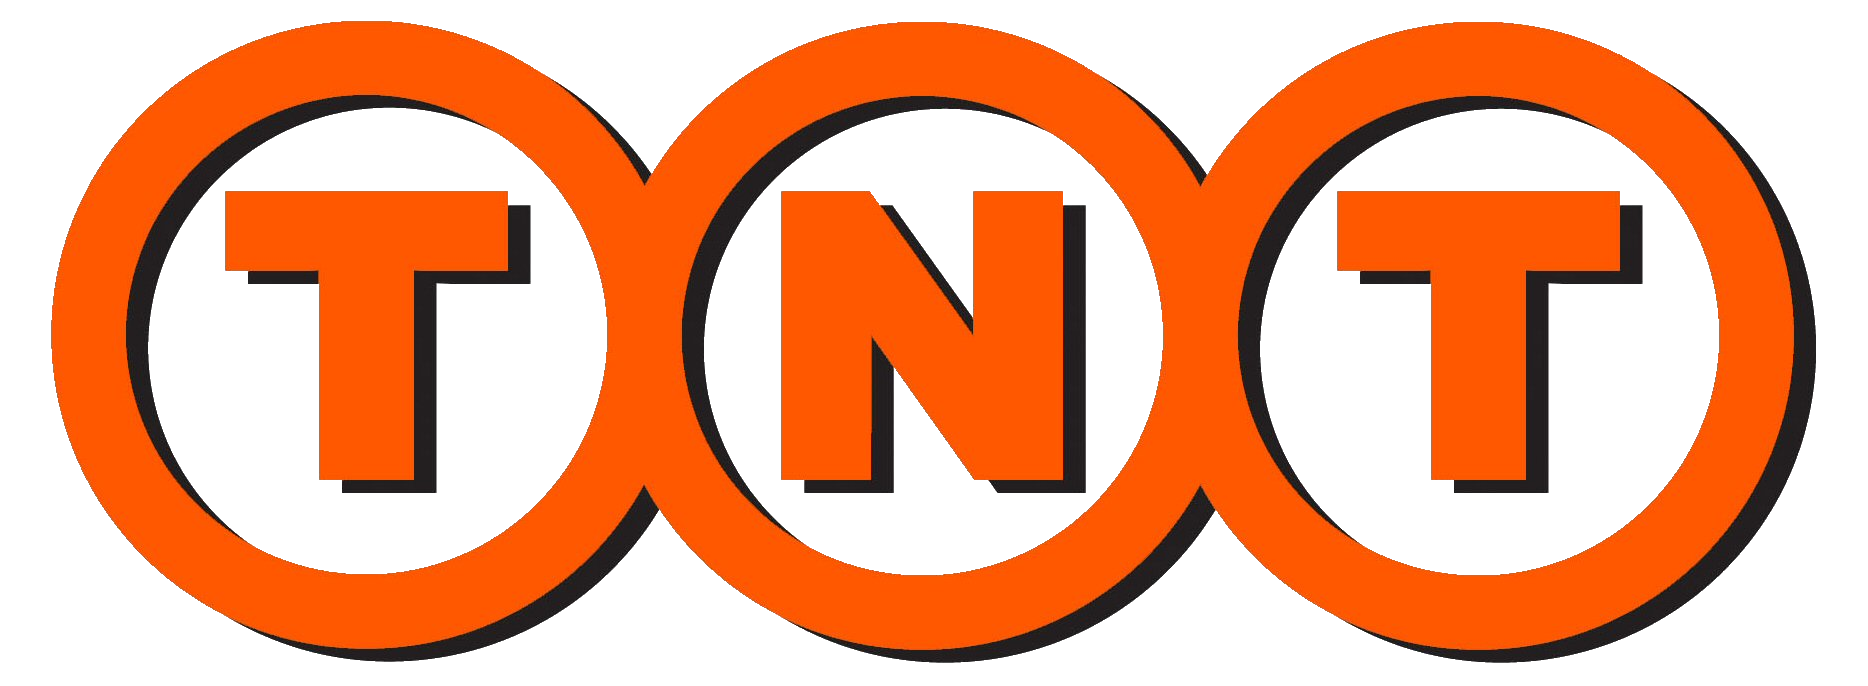 File:TNT Express logo.png